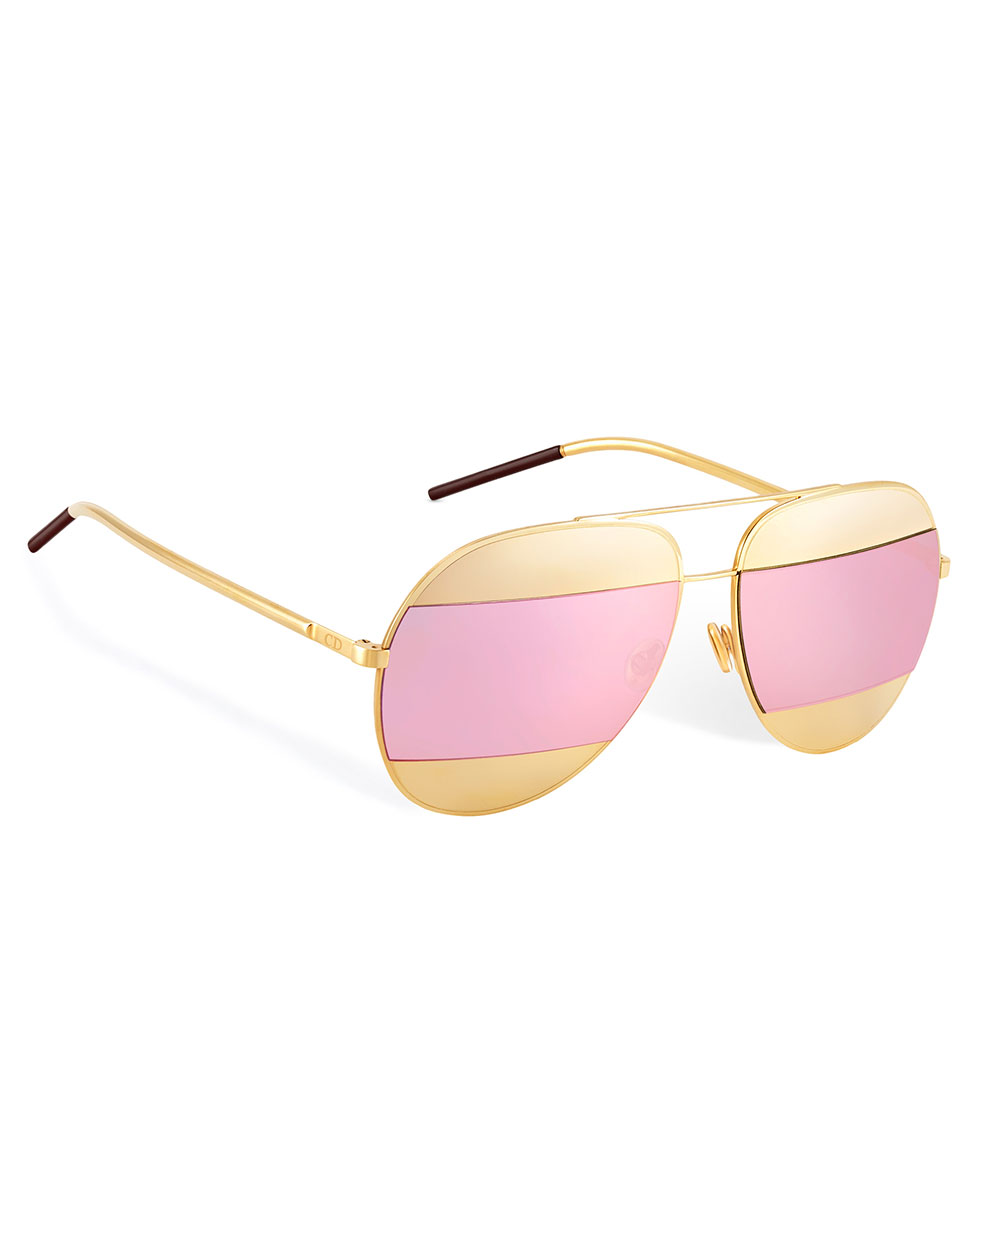 Dior sunglasses from Sunglass Bar, $845